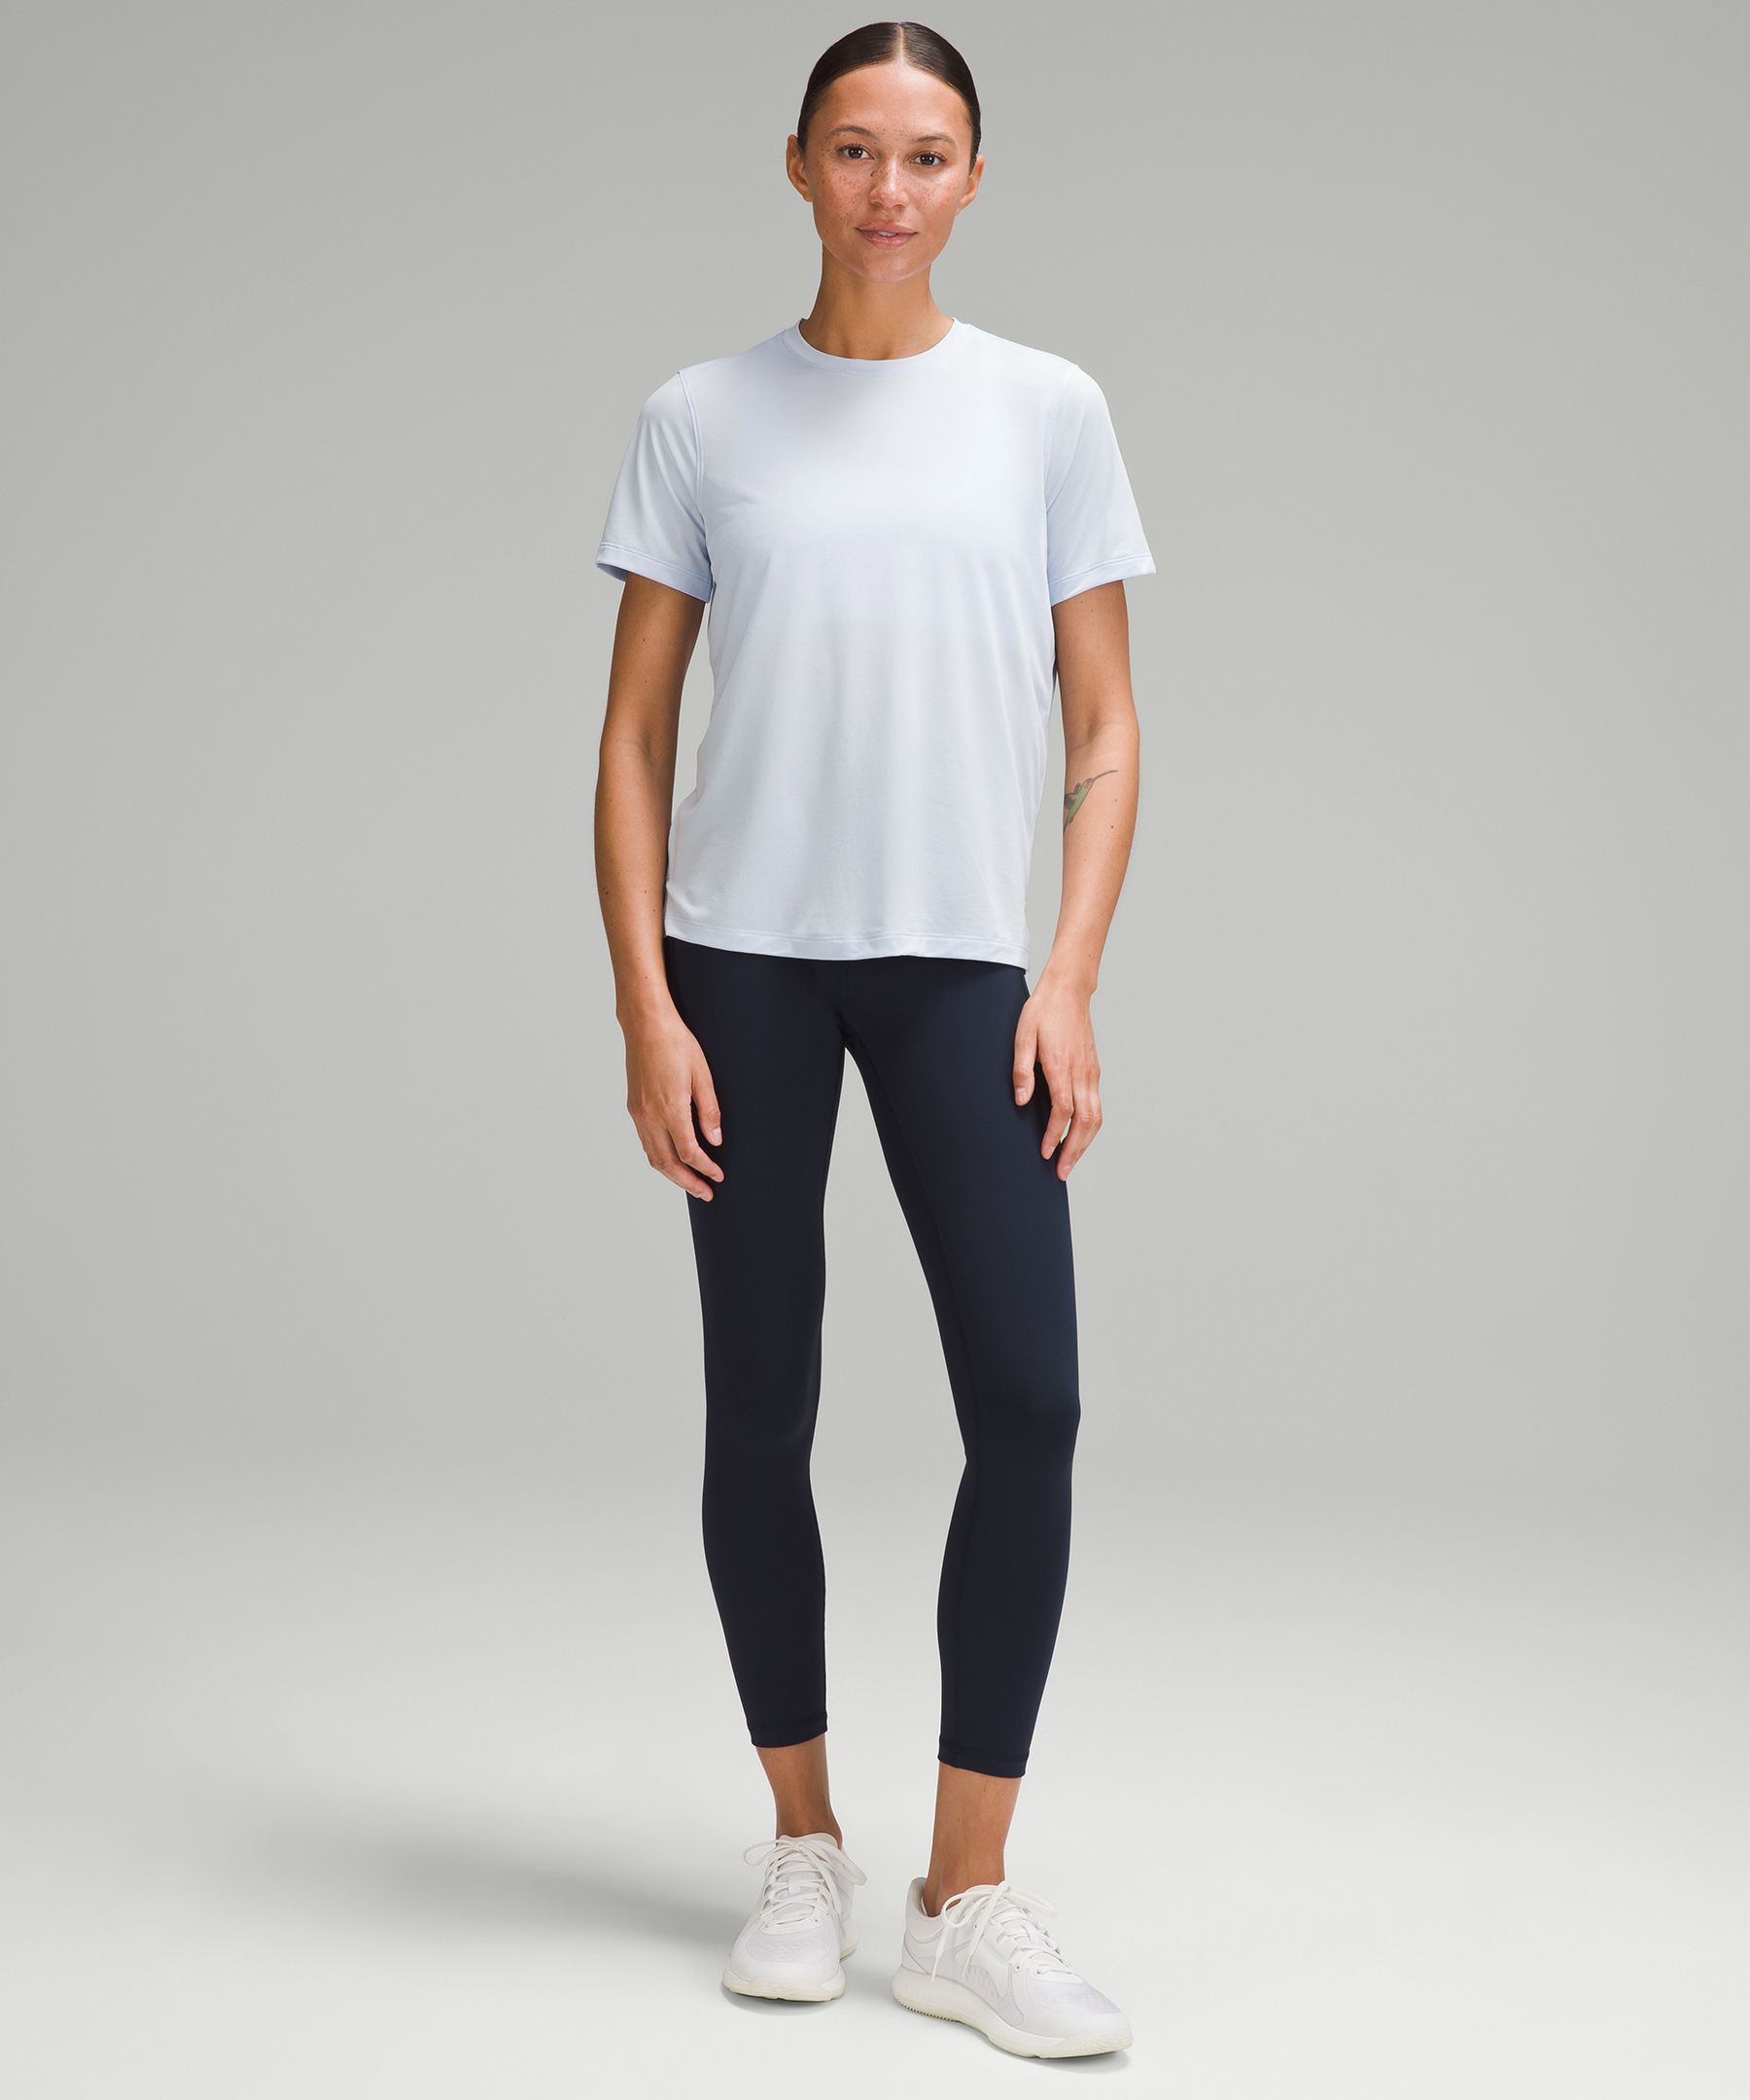 Lululemon Women's Gray Running Training T-Shirt Mesh Top Size: 6